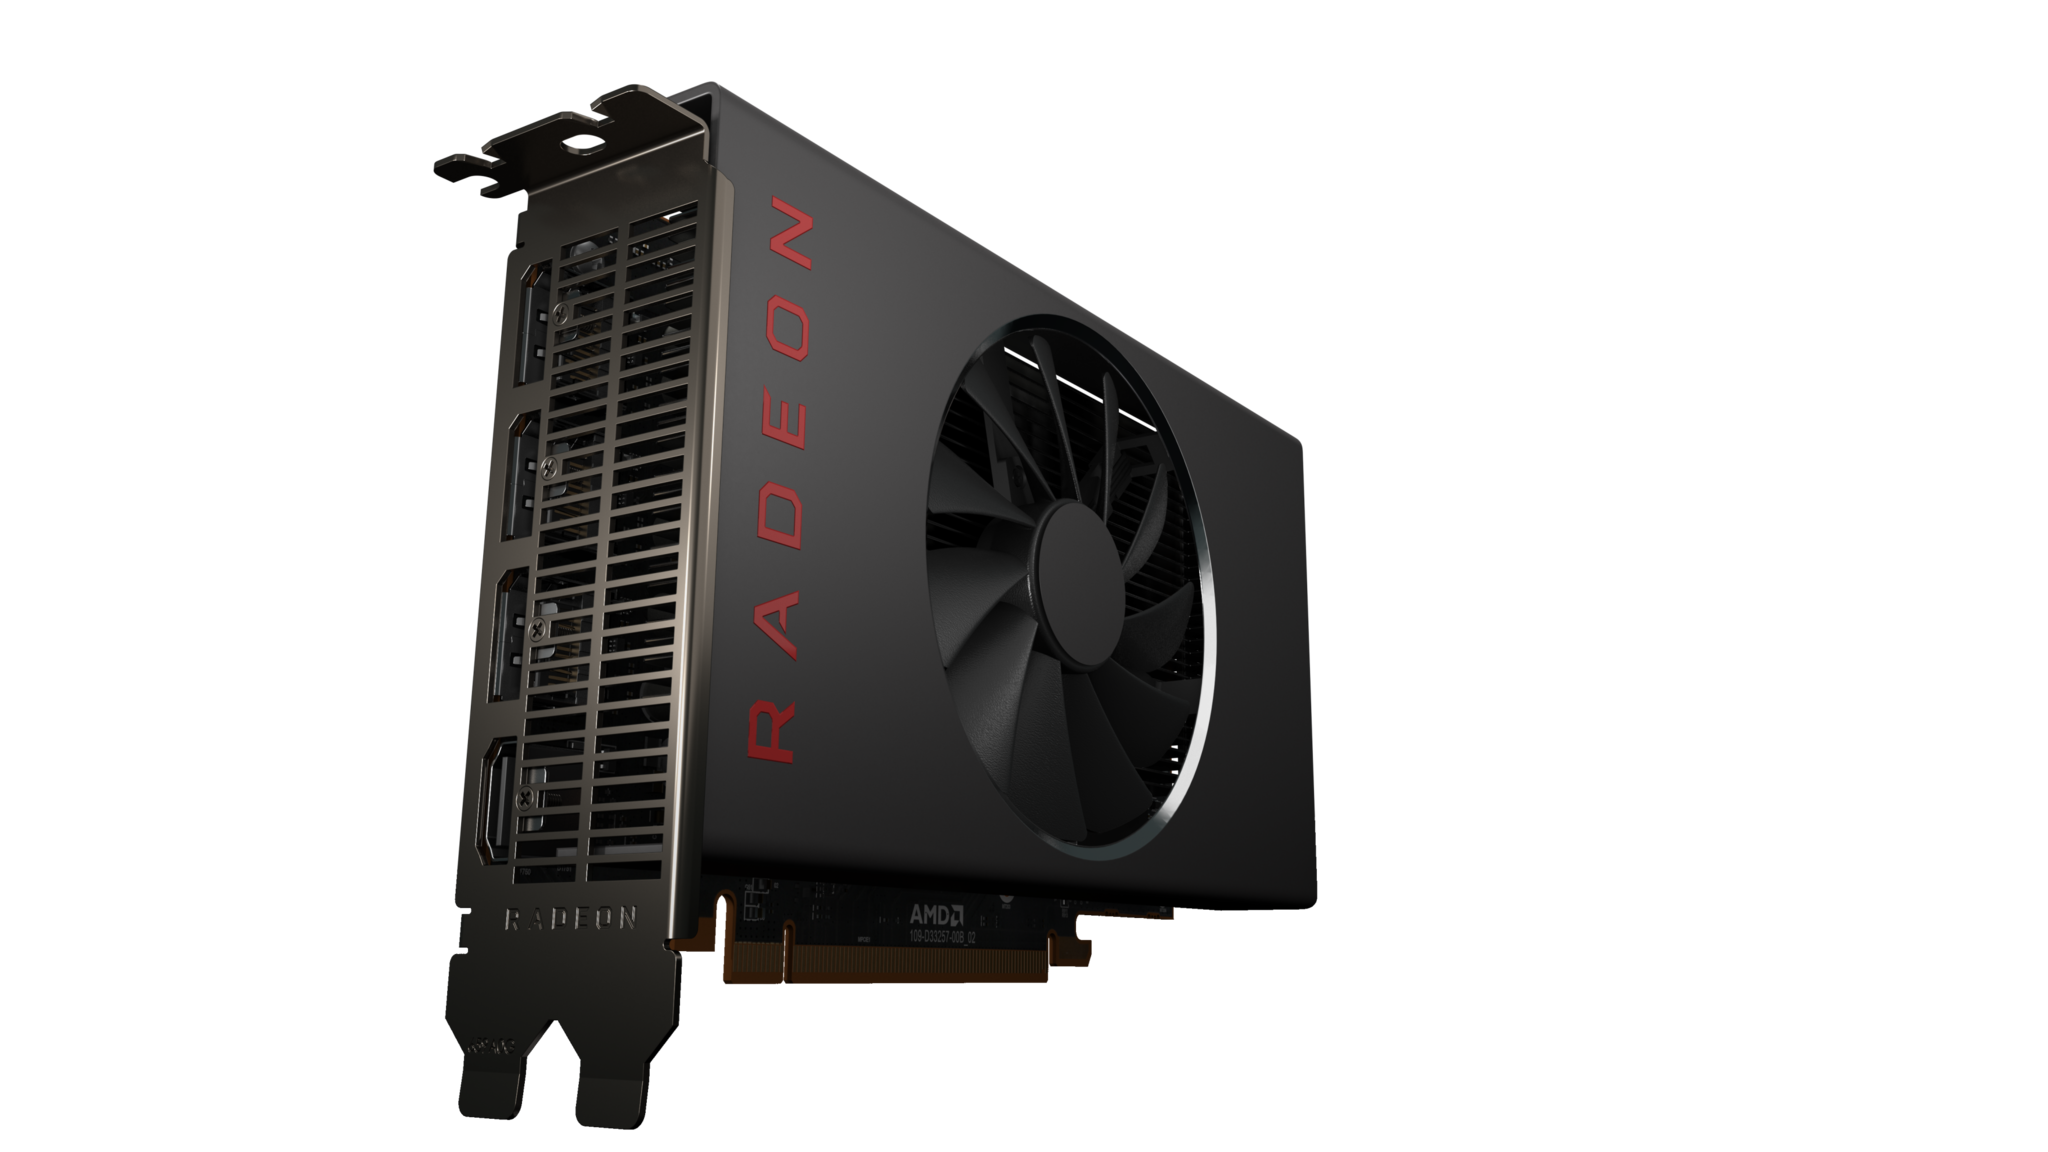 2 AMD เปิดตัวการ์ดจอ AMD Radeon RX 5500 ซีรี่ย์รุ่นใหม่ล่าสุดขนาด 7nm ทั้งเดสก์ท็อปและแล็ปท็อปเน้นตอบโจทย์เกมส์มิ่งในราคาสุดคุ้ม